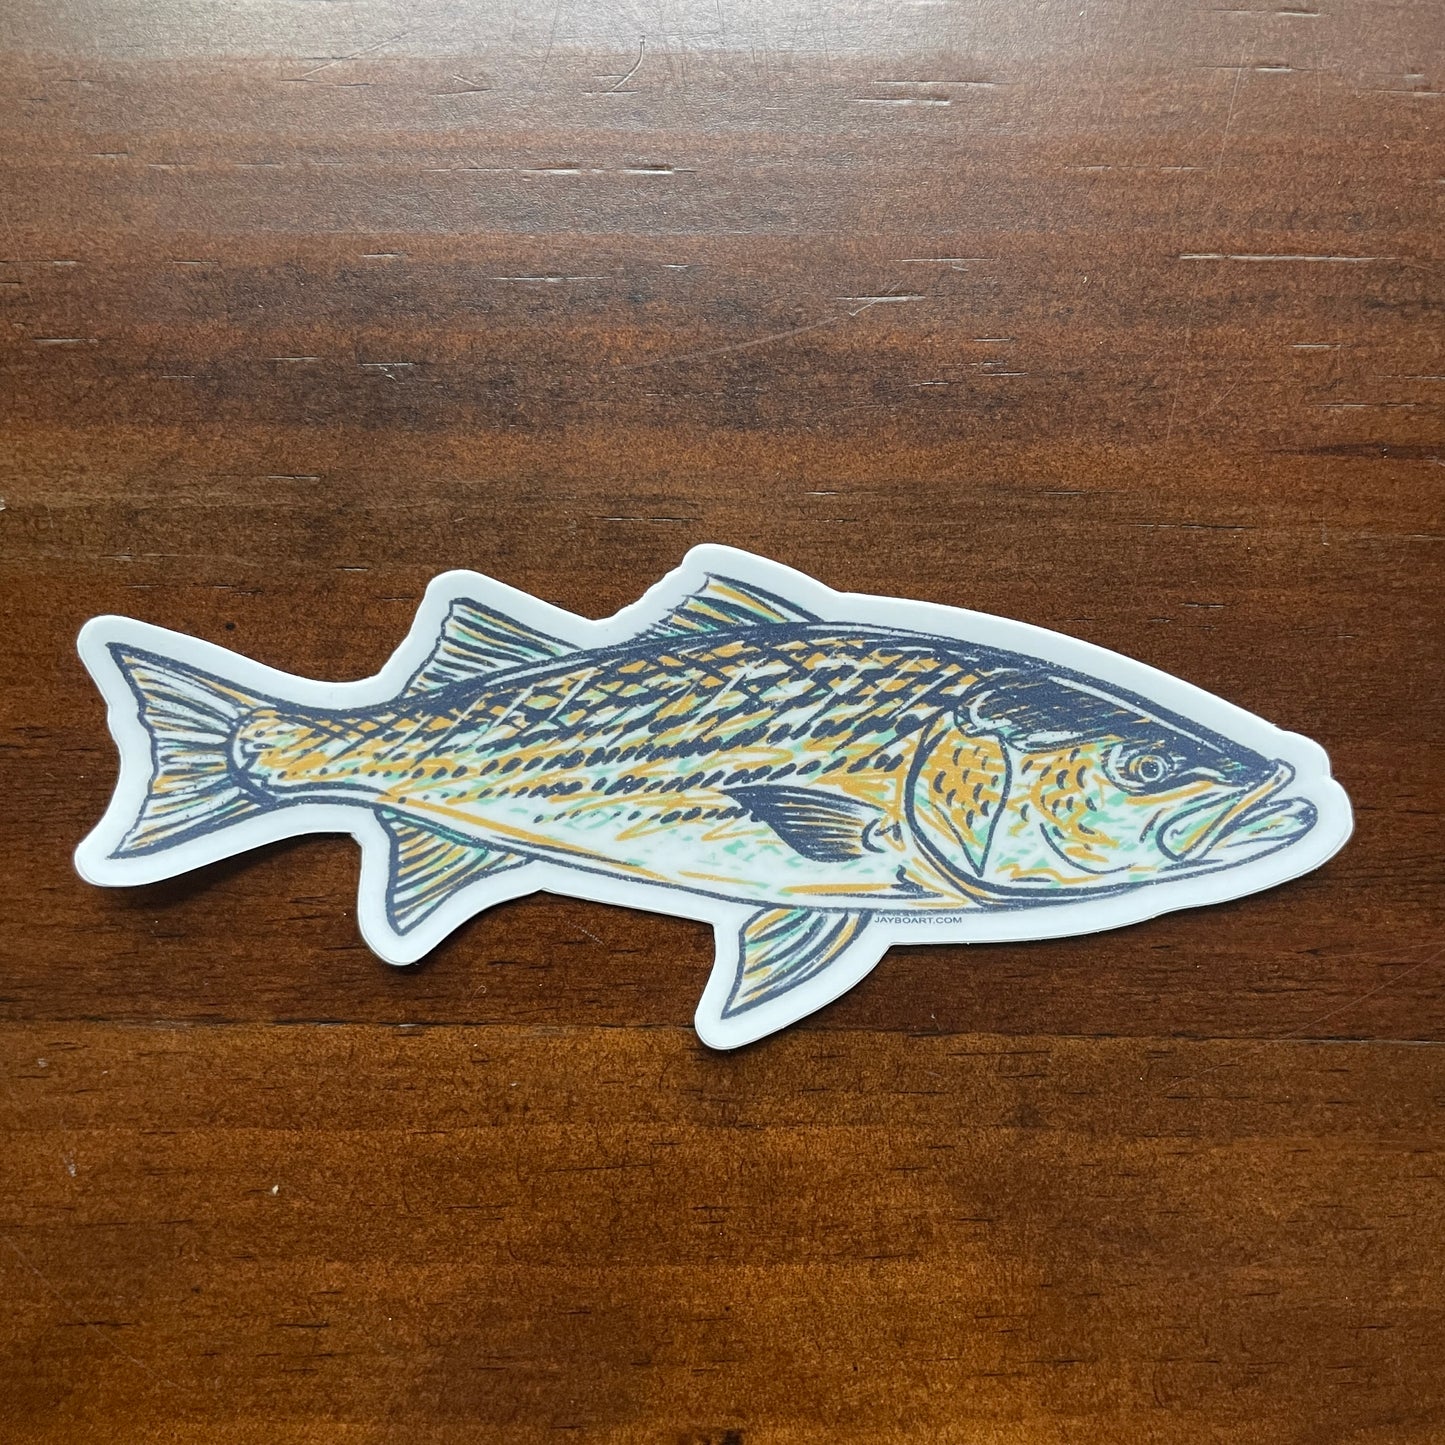 Striper/Rockfish Decal